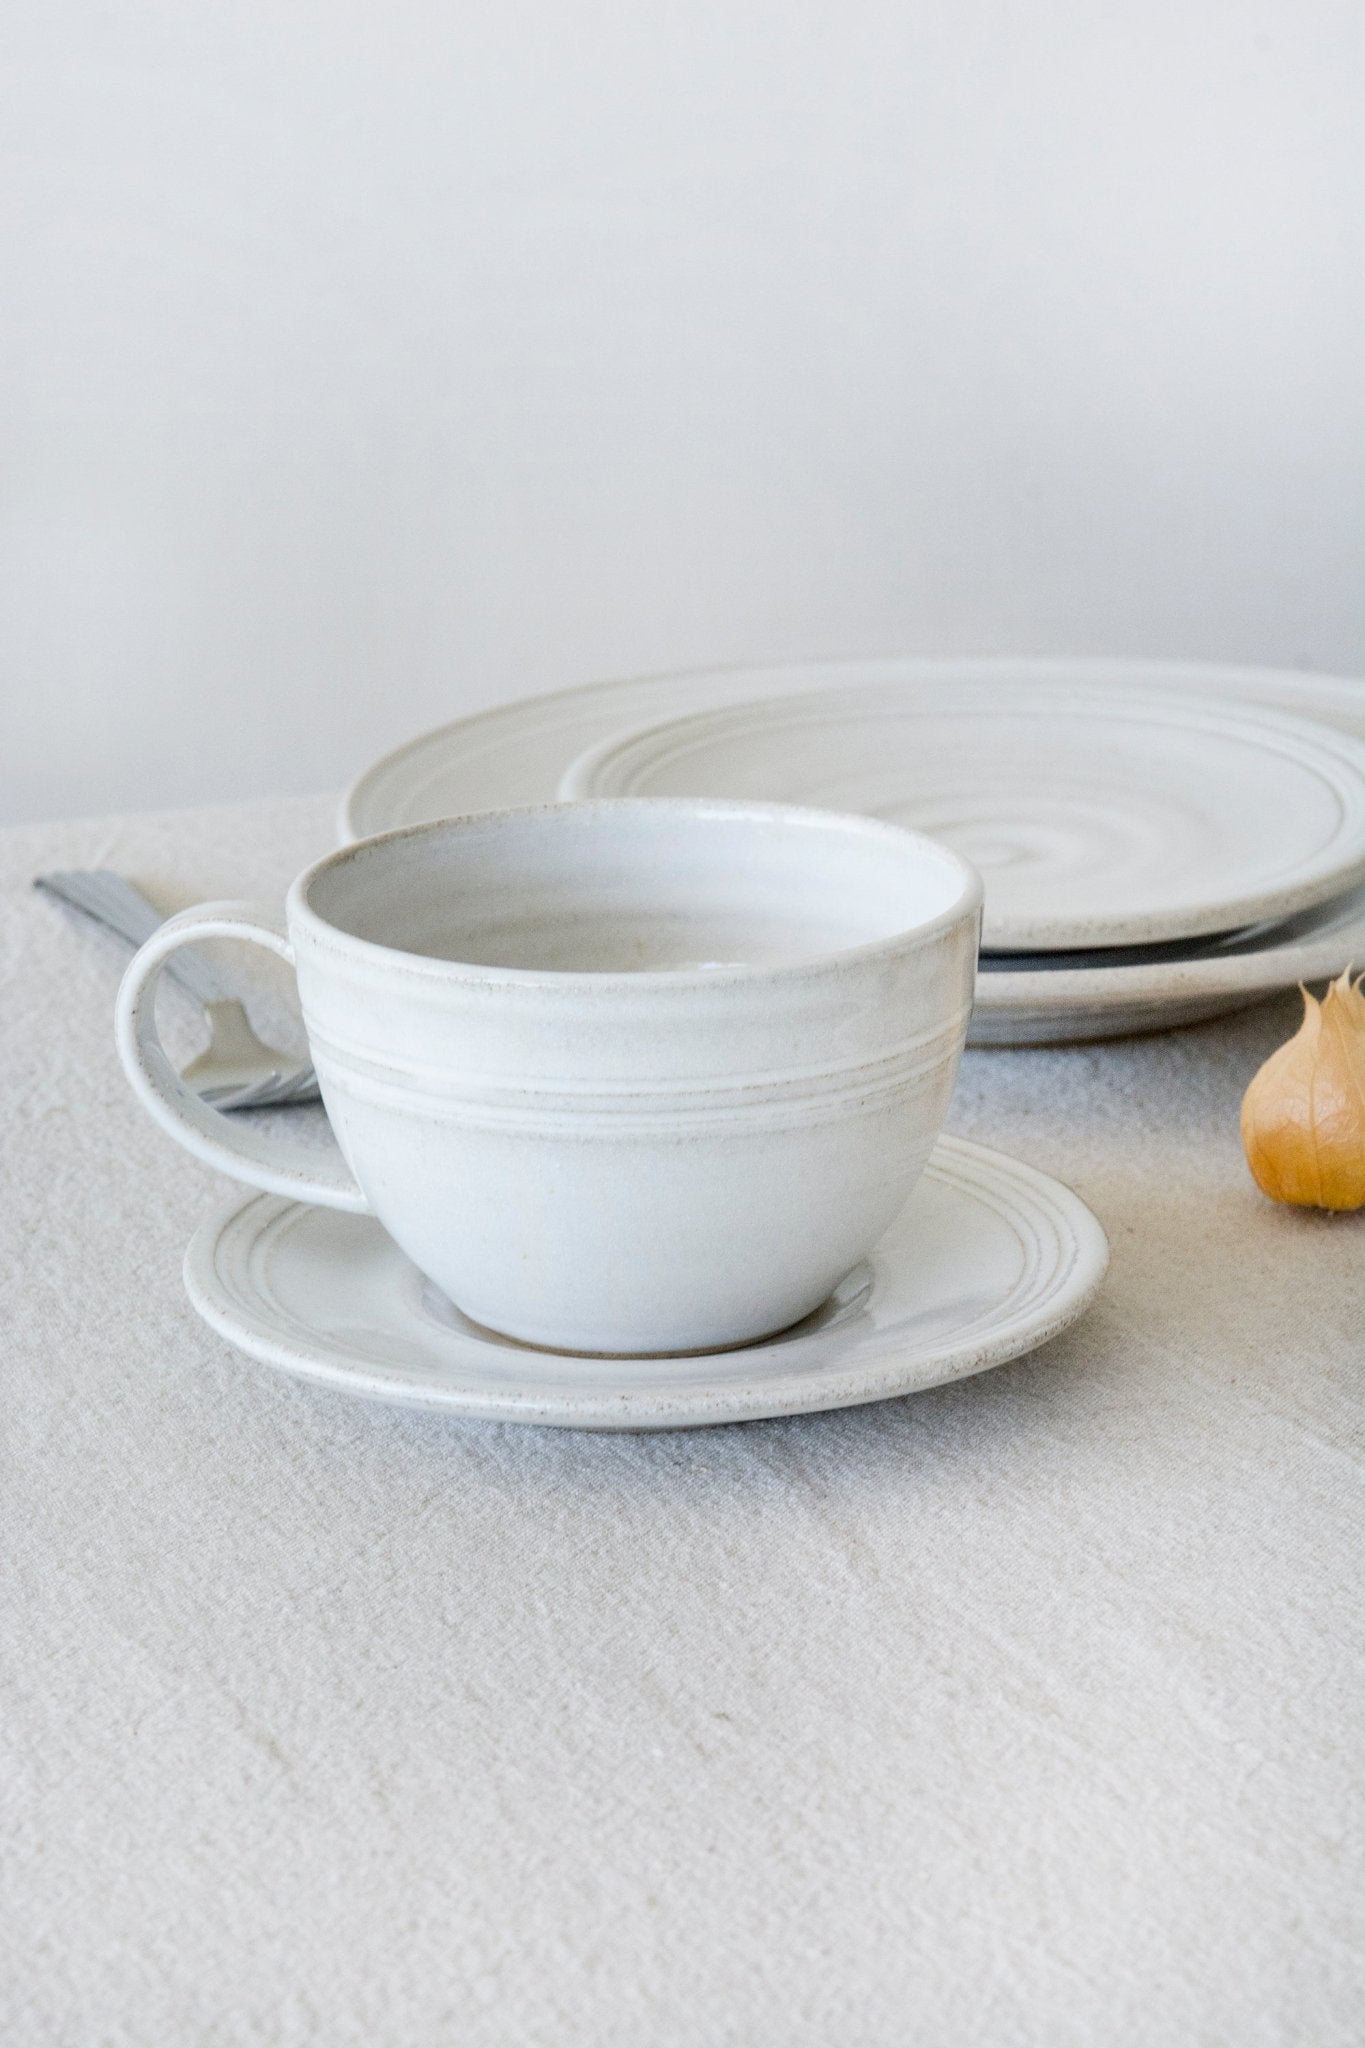 Porcelain Dinnerware Set Cups Saucers